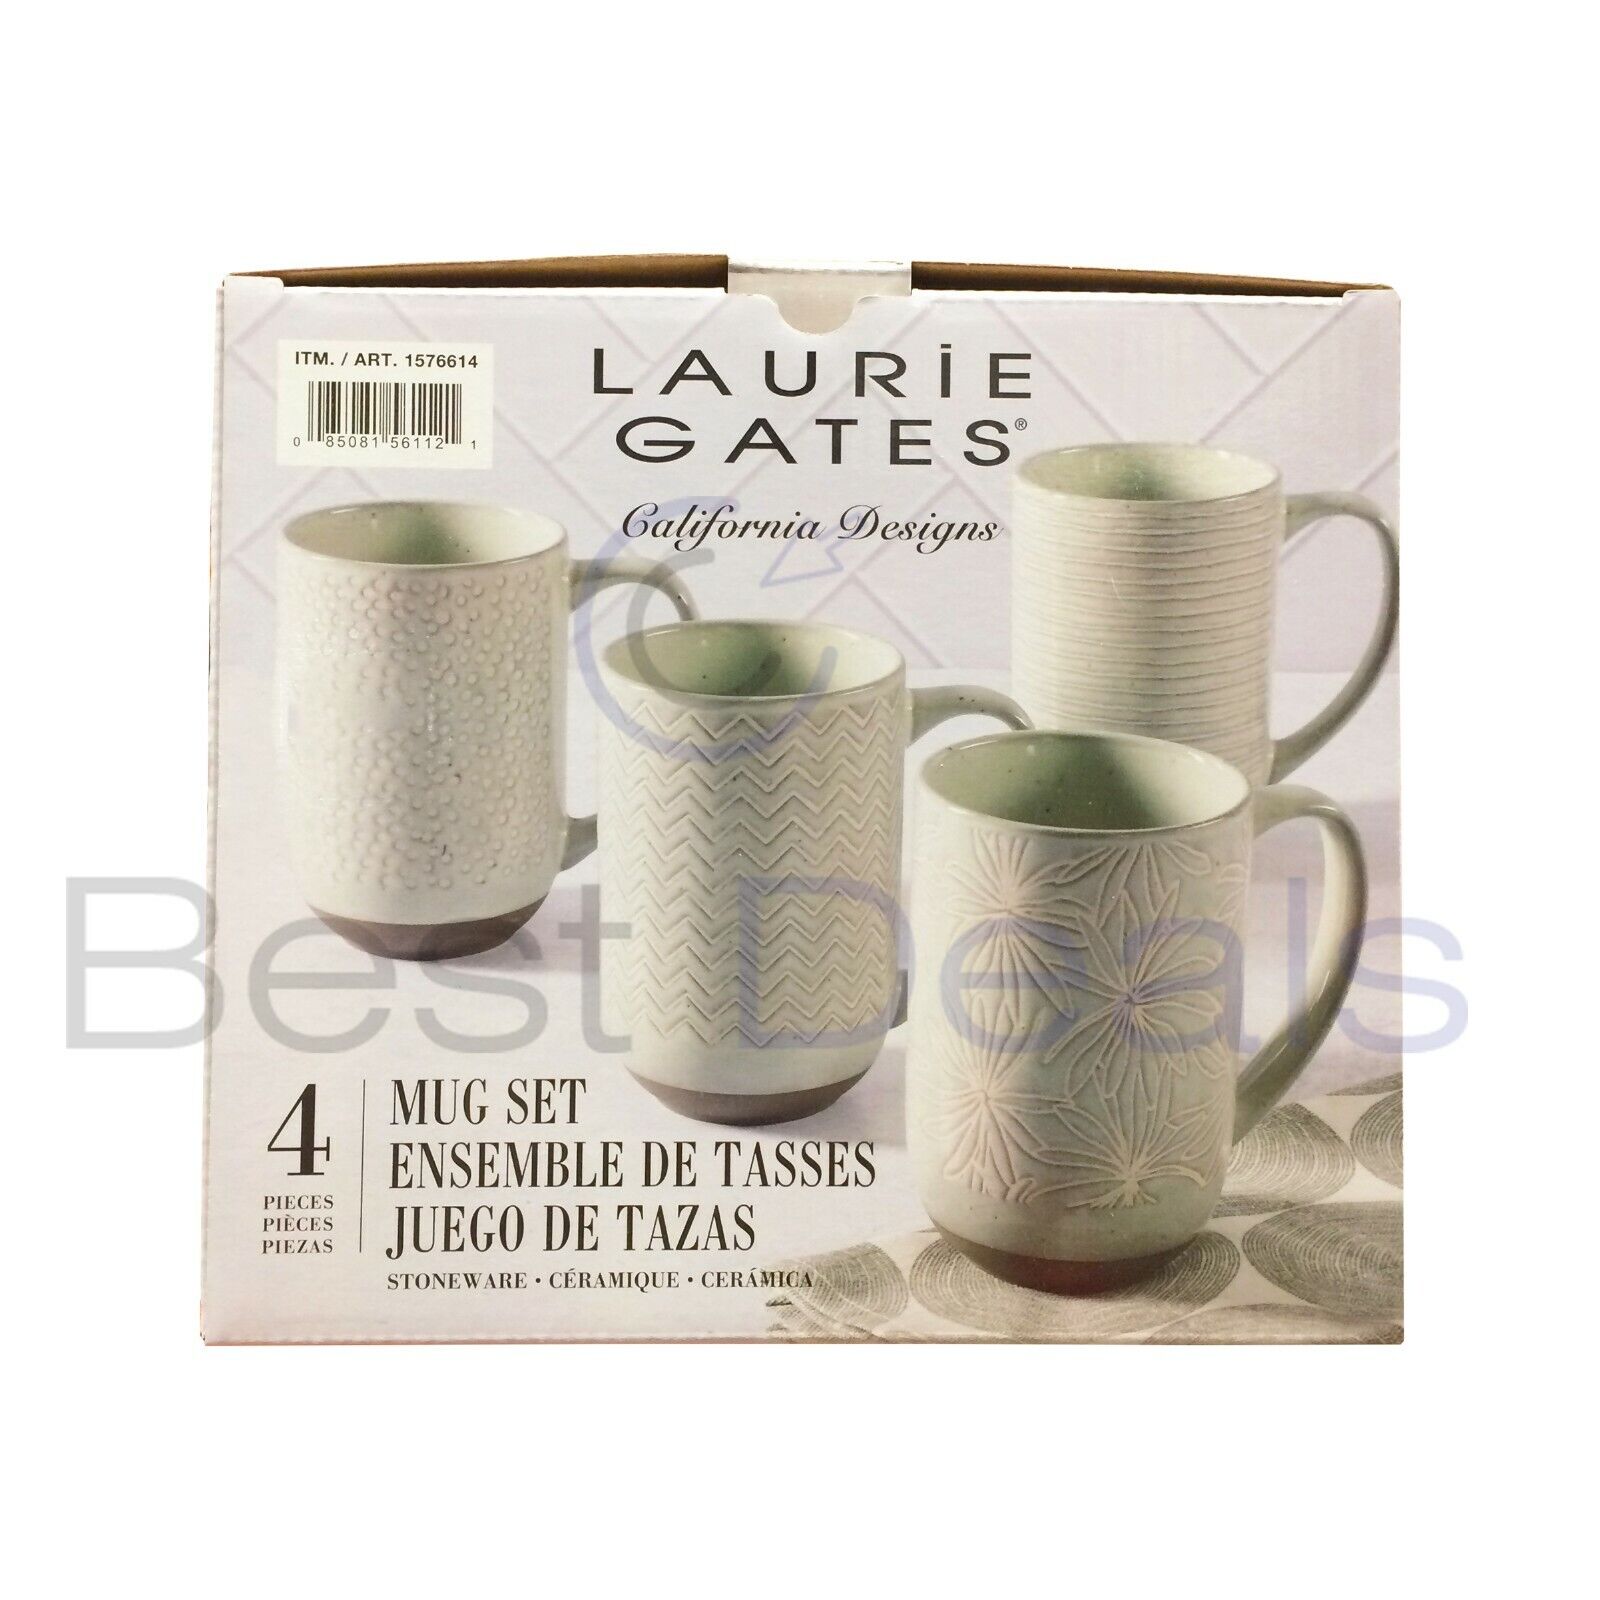 Laurie Gates California Designs Ceramic Mugs Set 4 Pack White Brand NEW